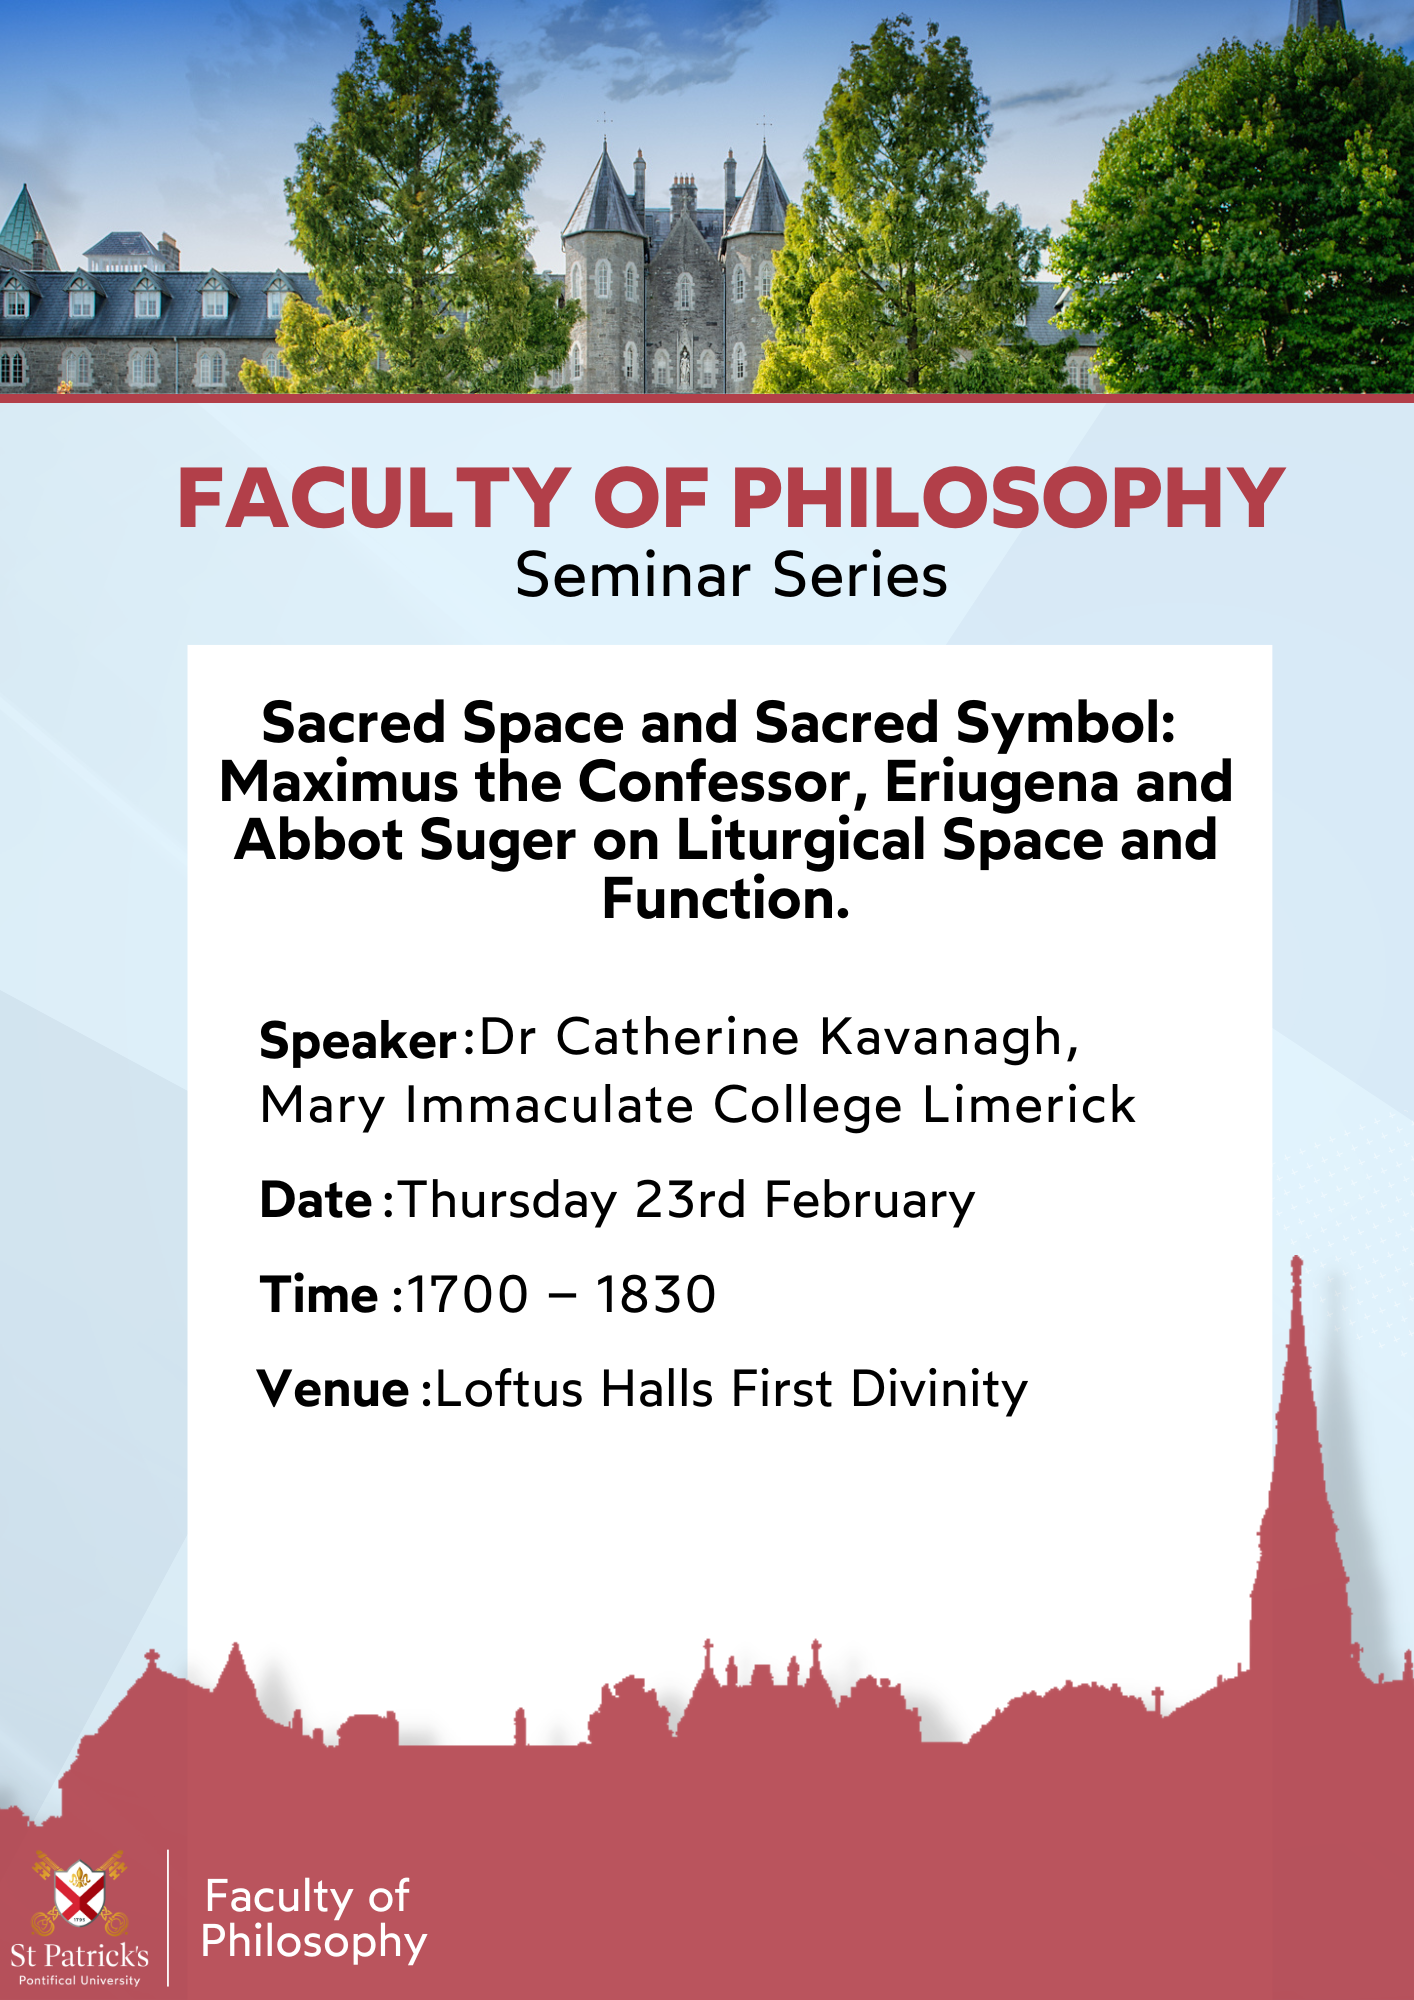 Faculty-of-Philosophy-Seminar-Series.png#asset:13841